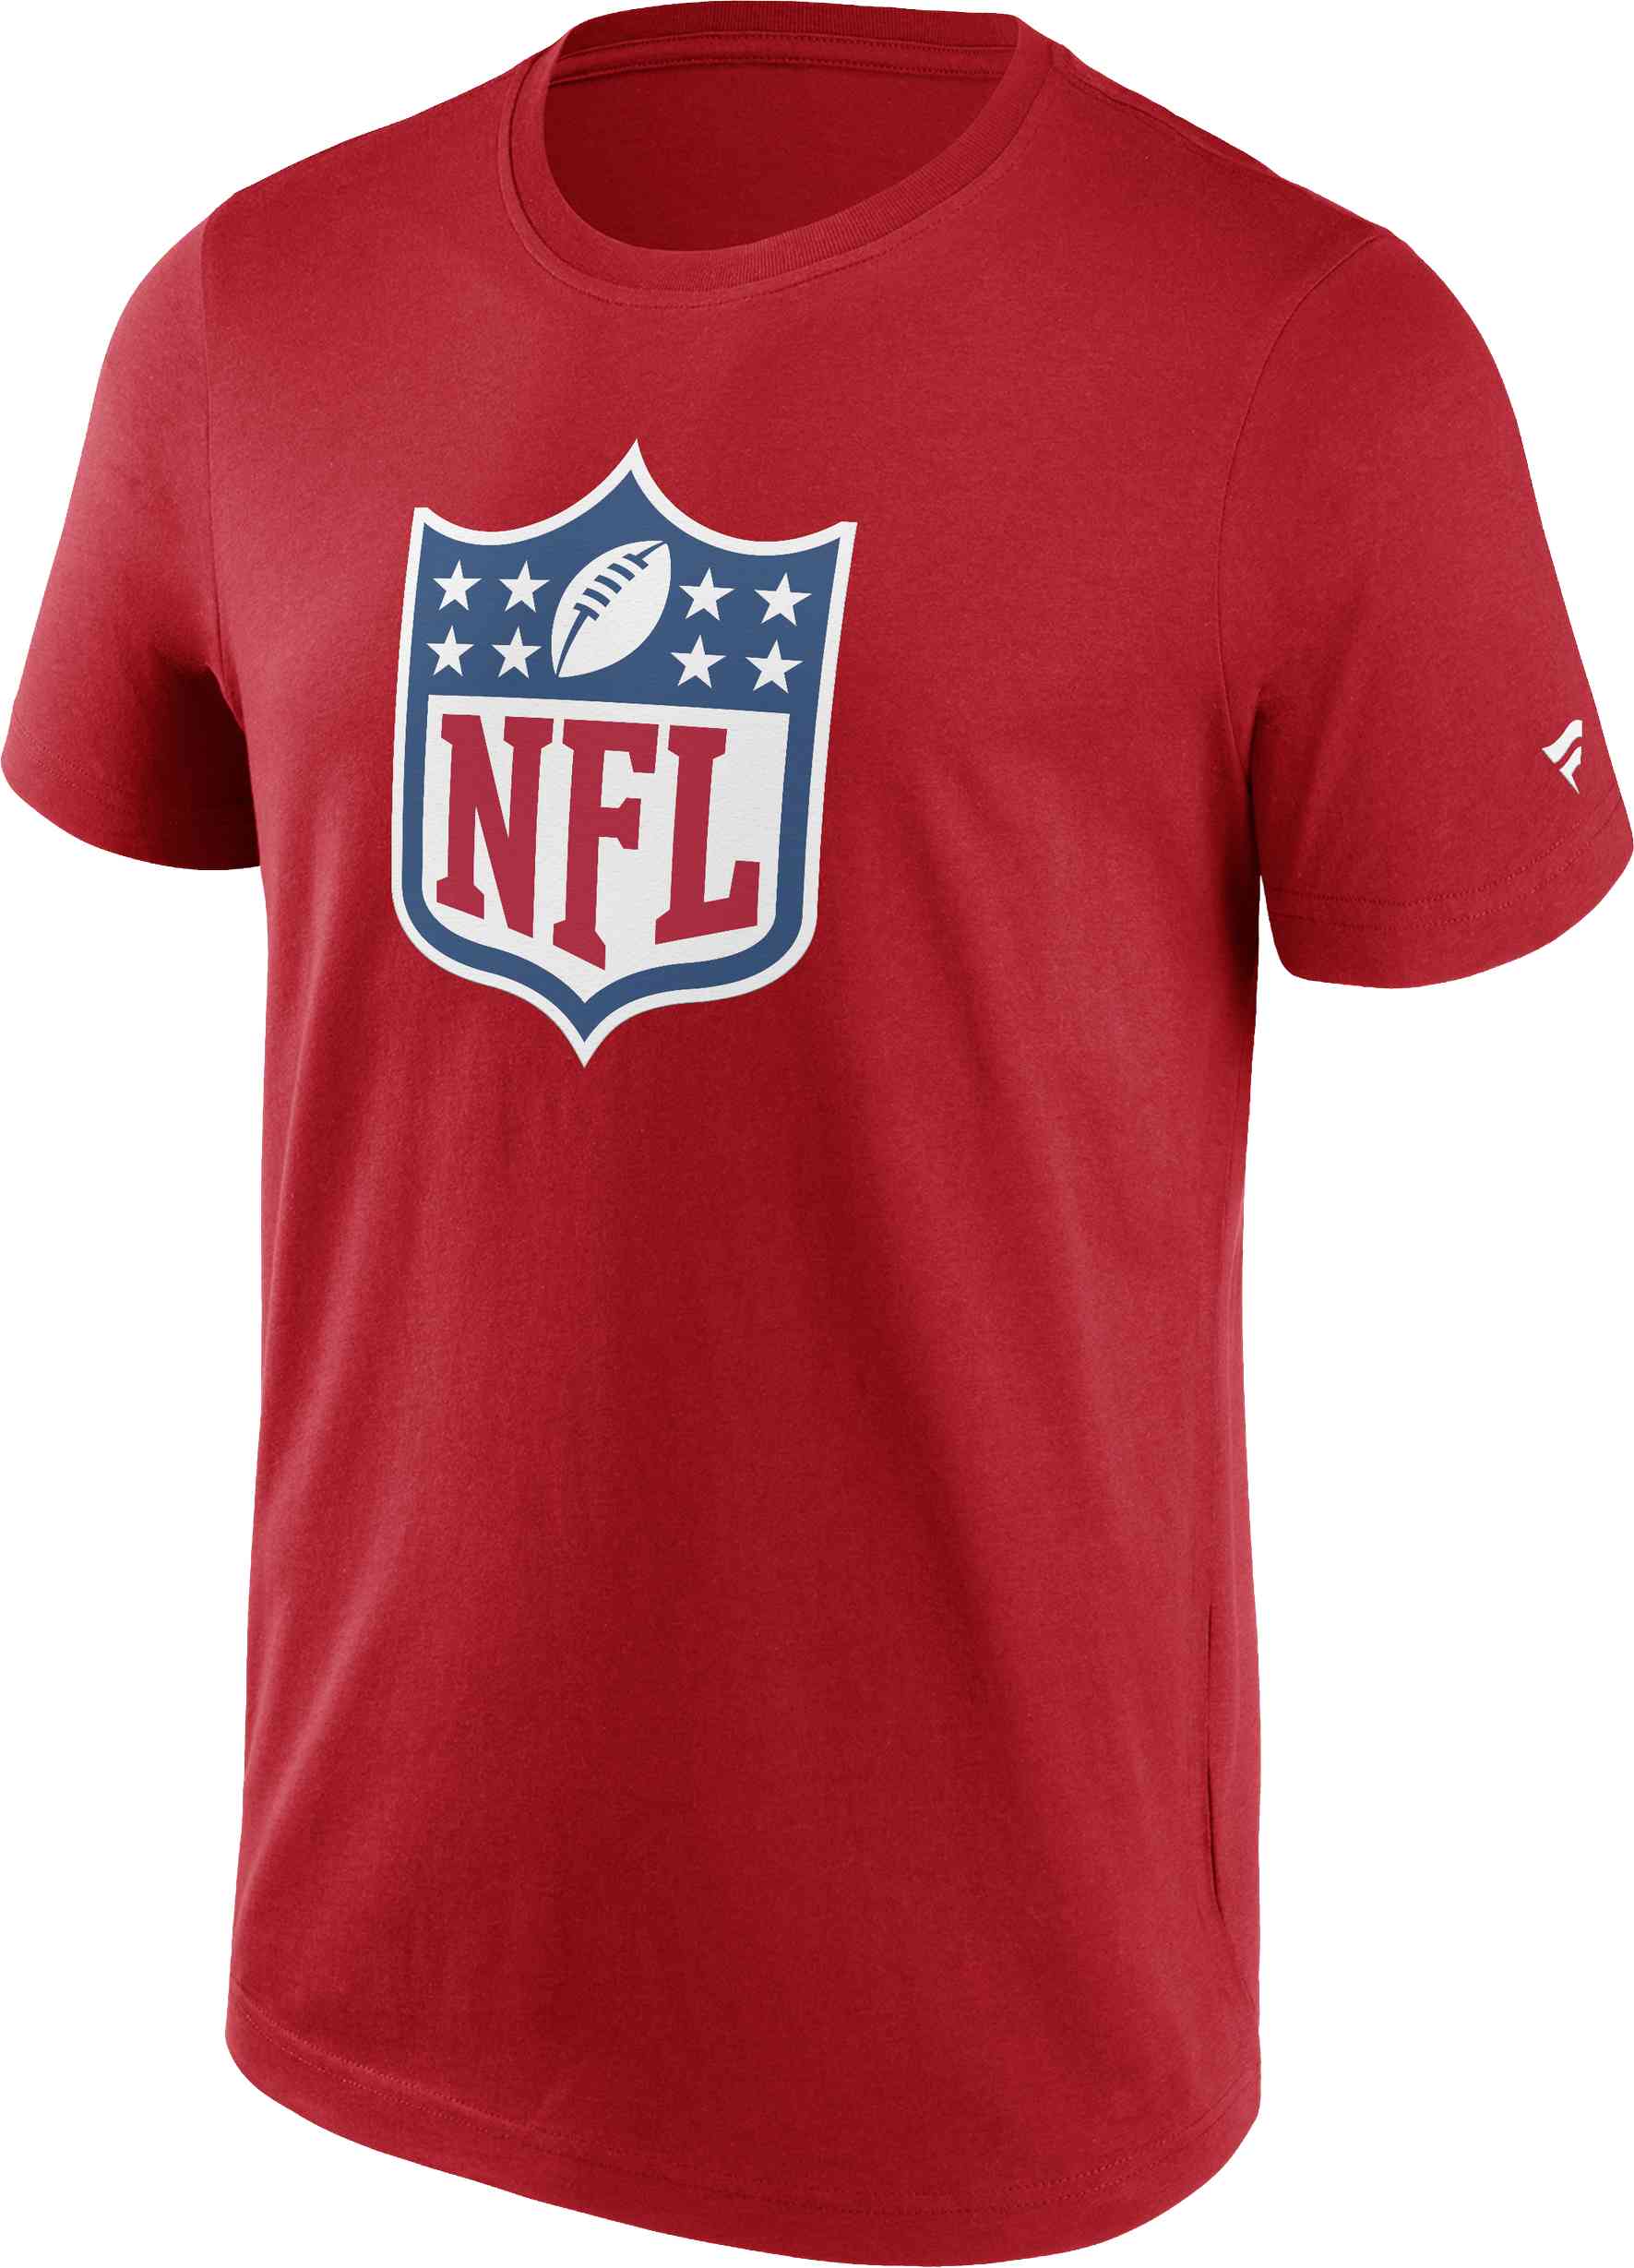 Fanatics - NFL Shield Primary Logo Graphic T-Shirt